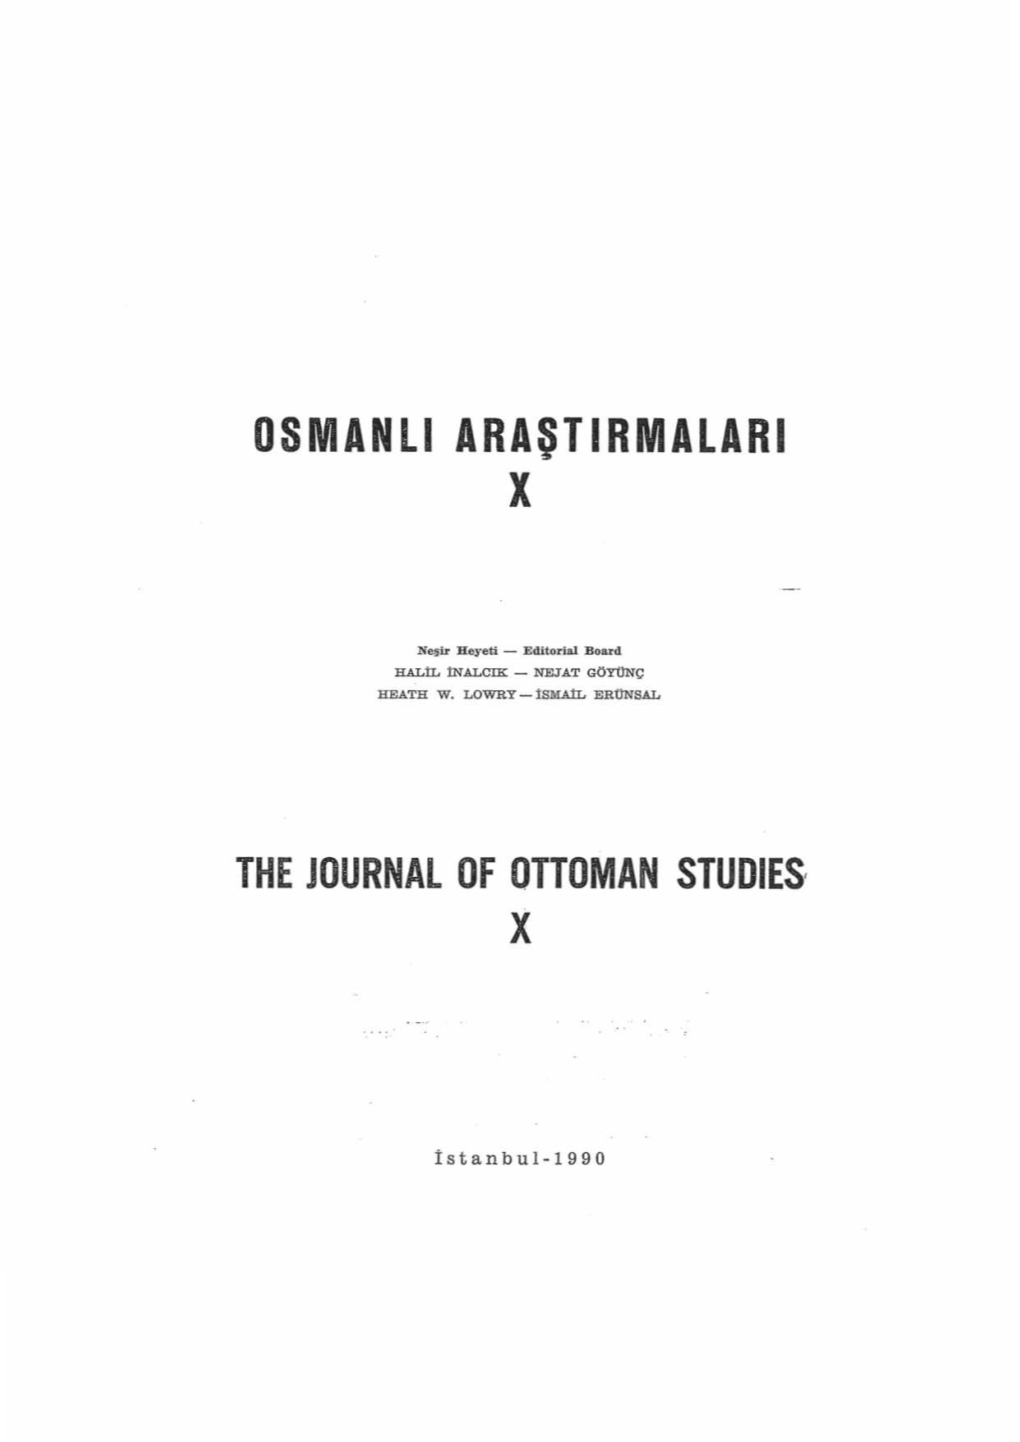 The Journal of Ottoman Studies, X